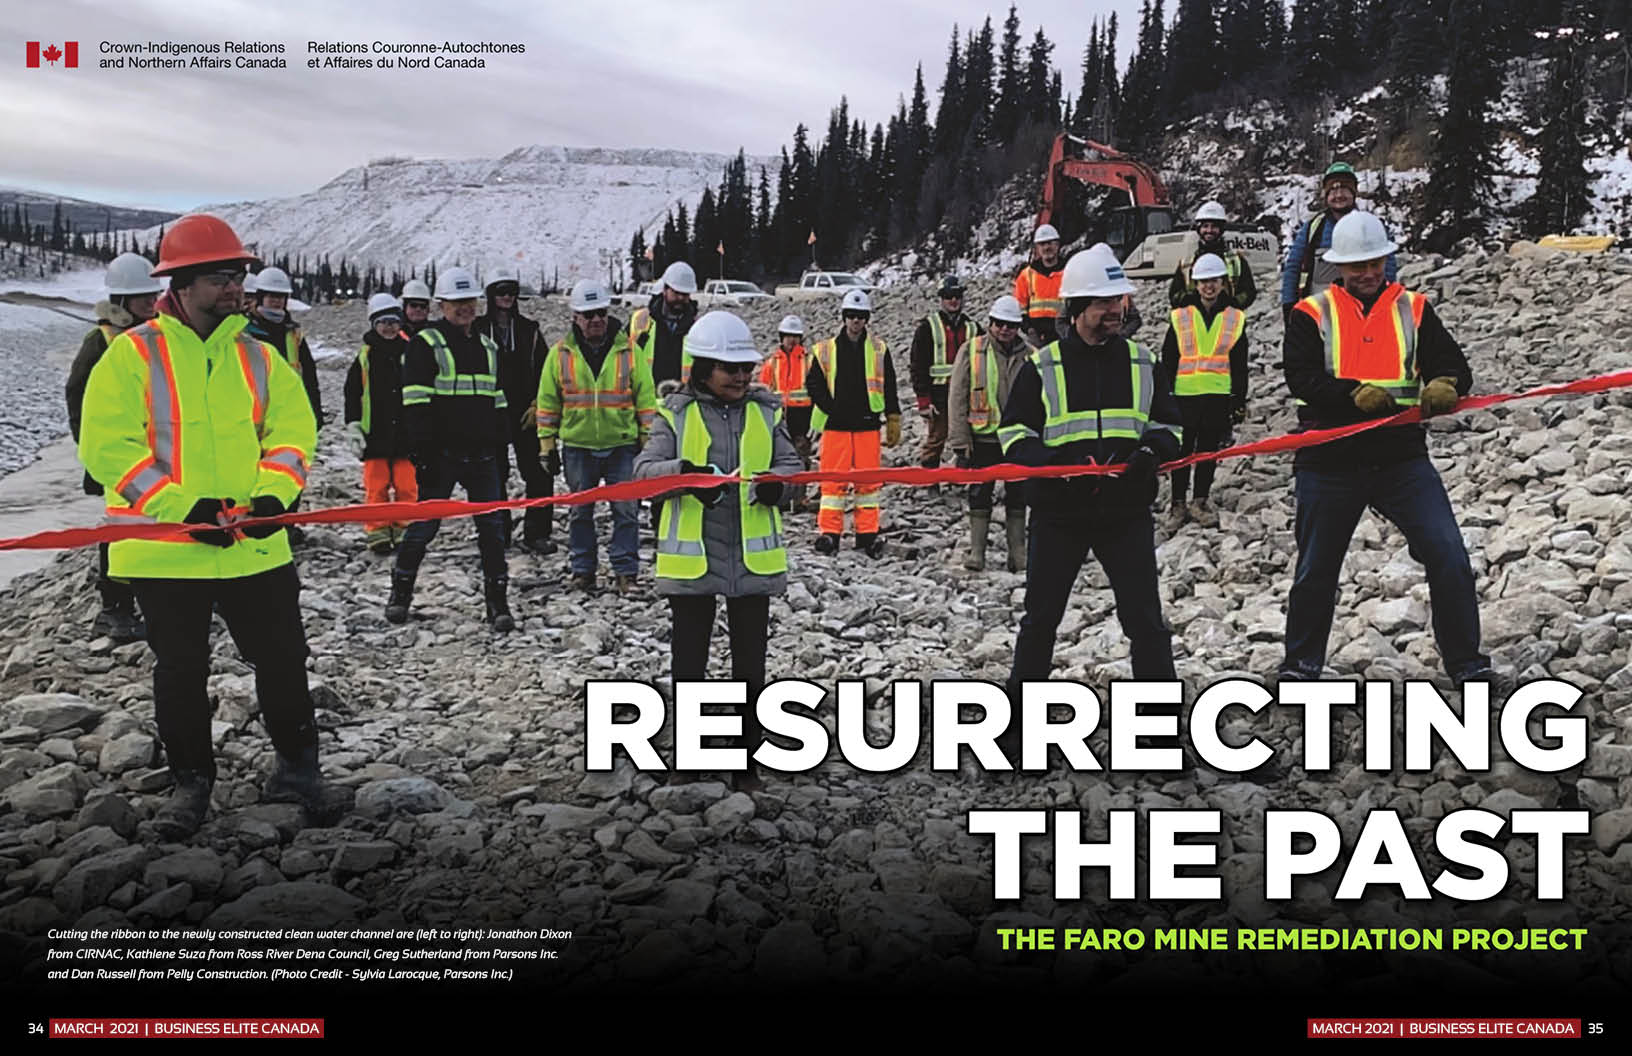 Faro Mine Remediation Project